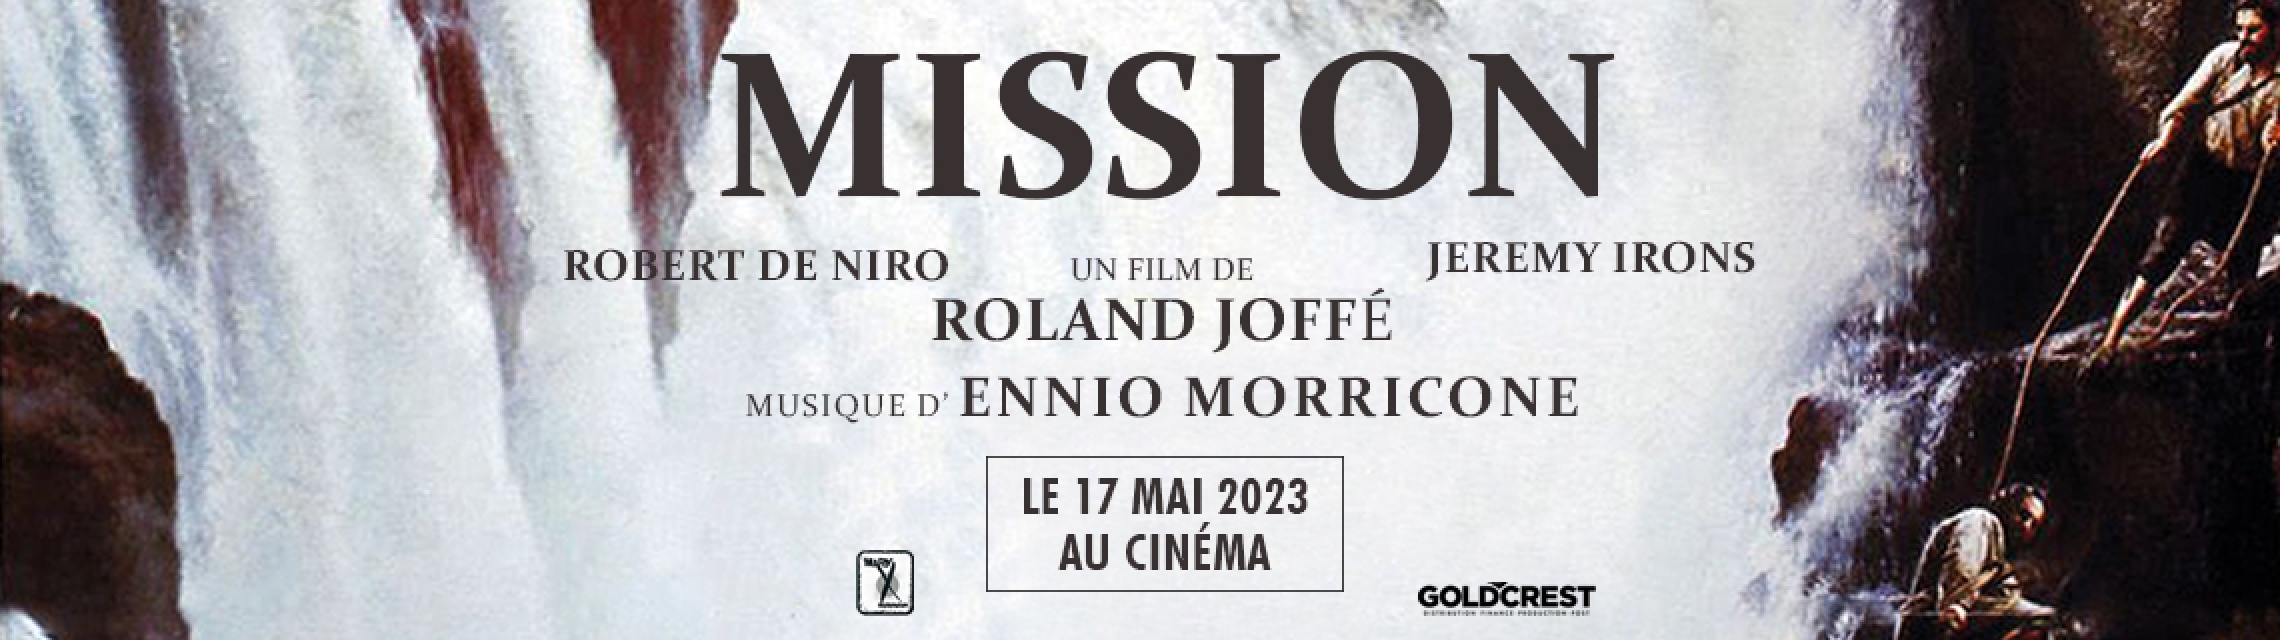 Mission film